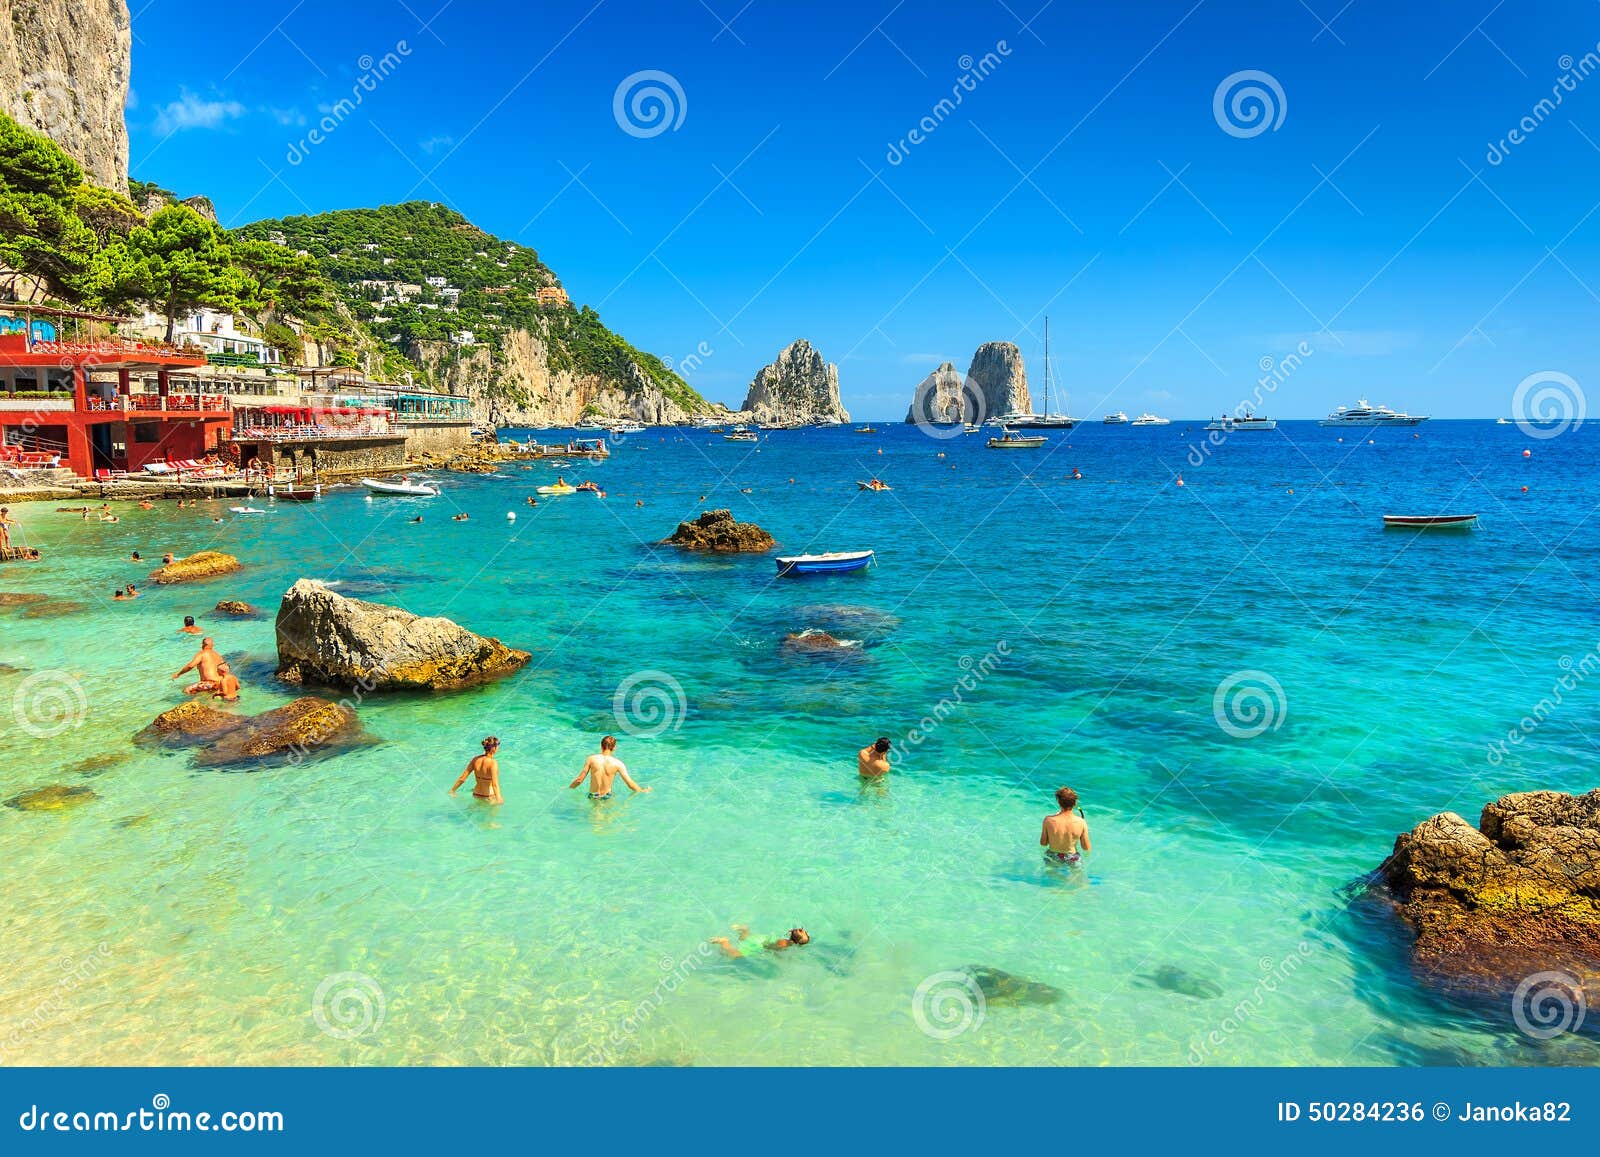 beautiful beach and cliffs in capri island, italy, europe